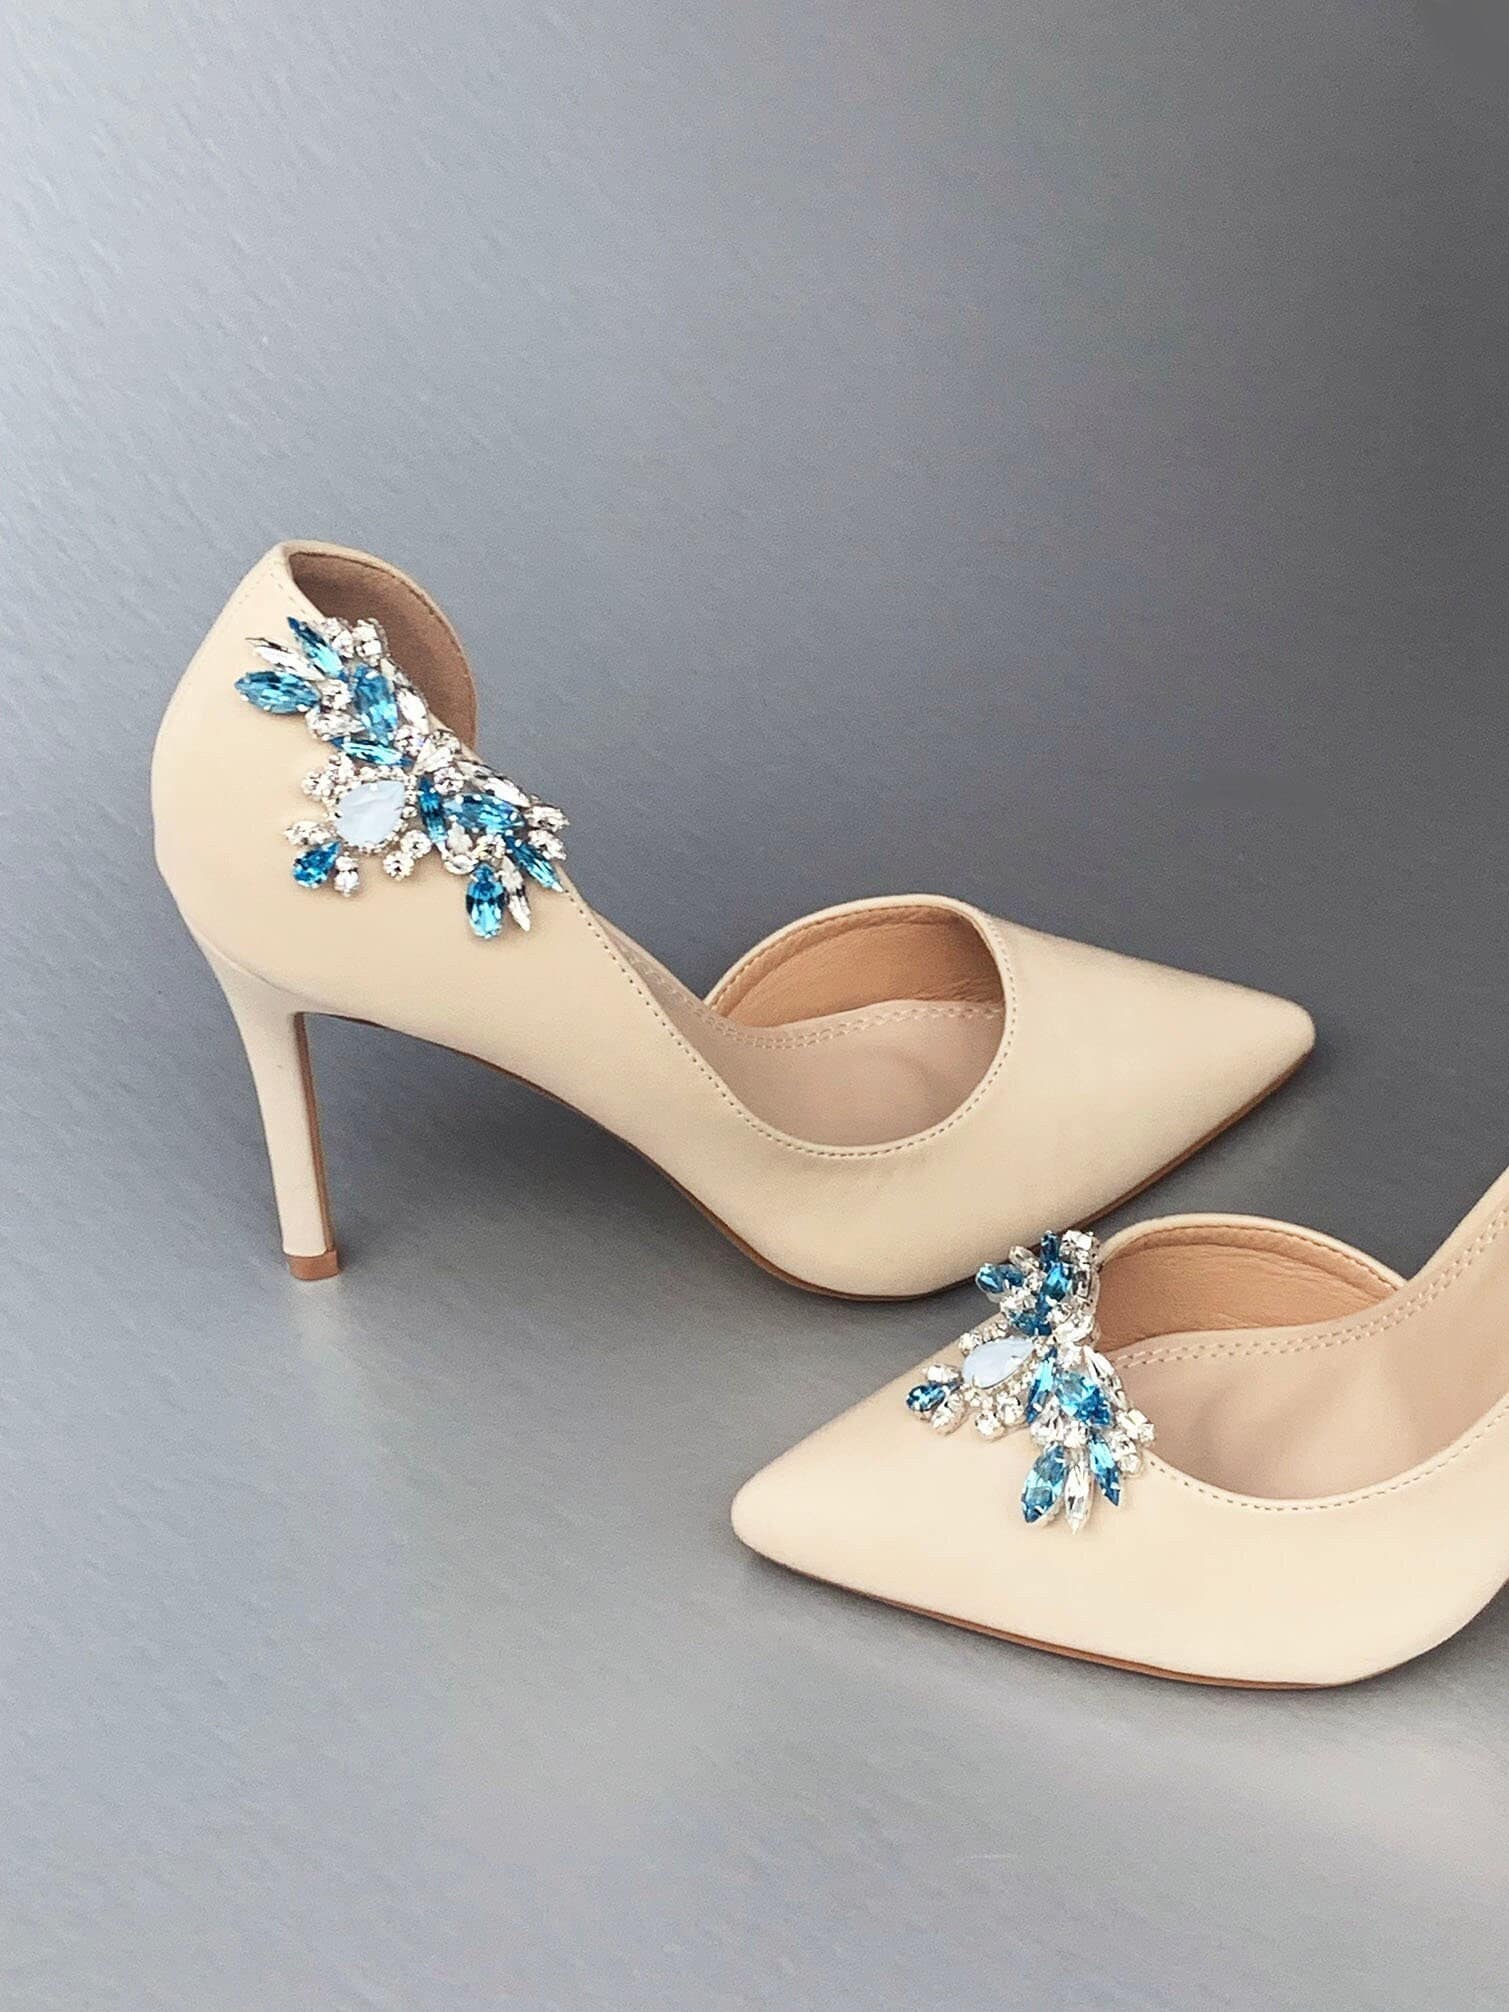 Something blue Shoe clips, Bridal shoe clips, Premium European